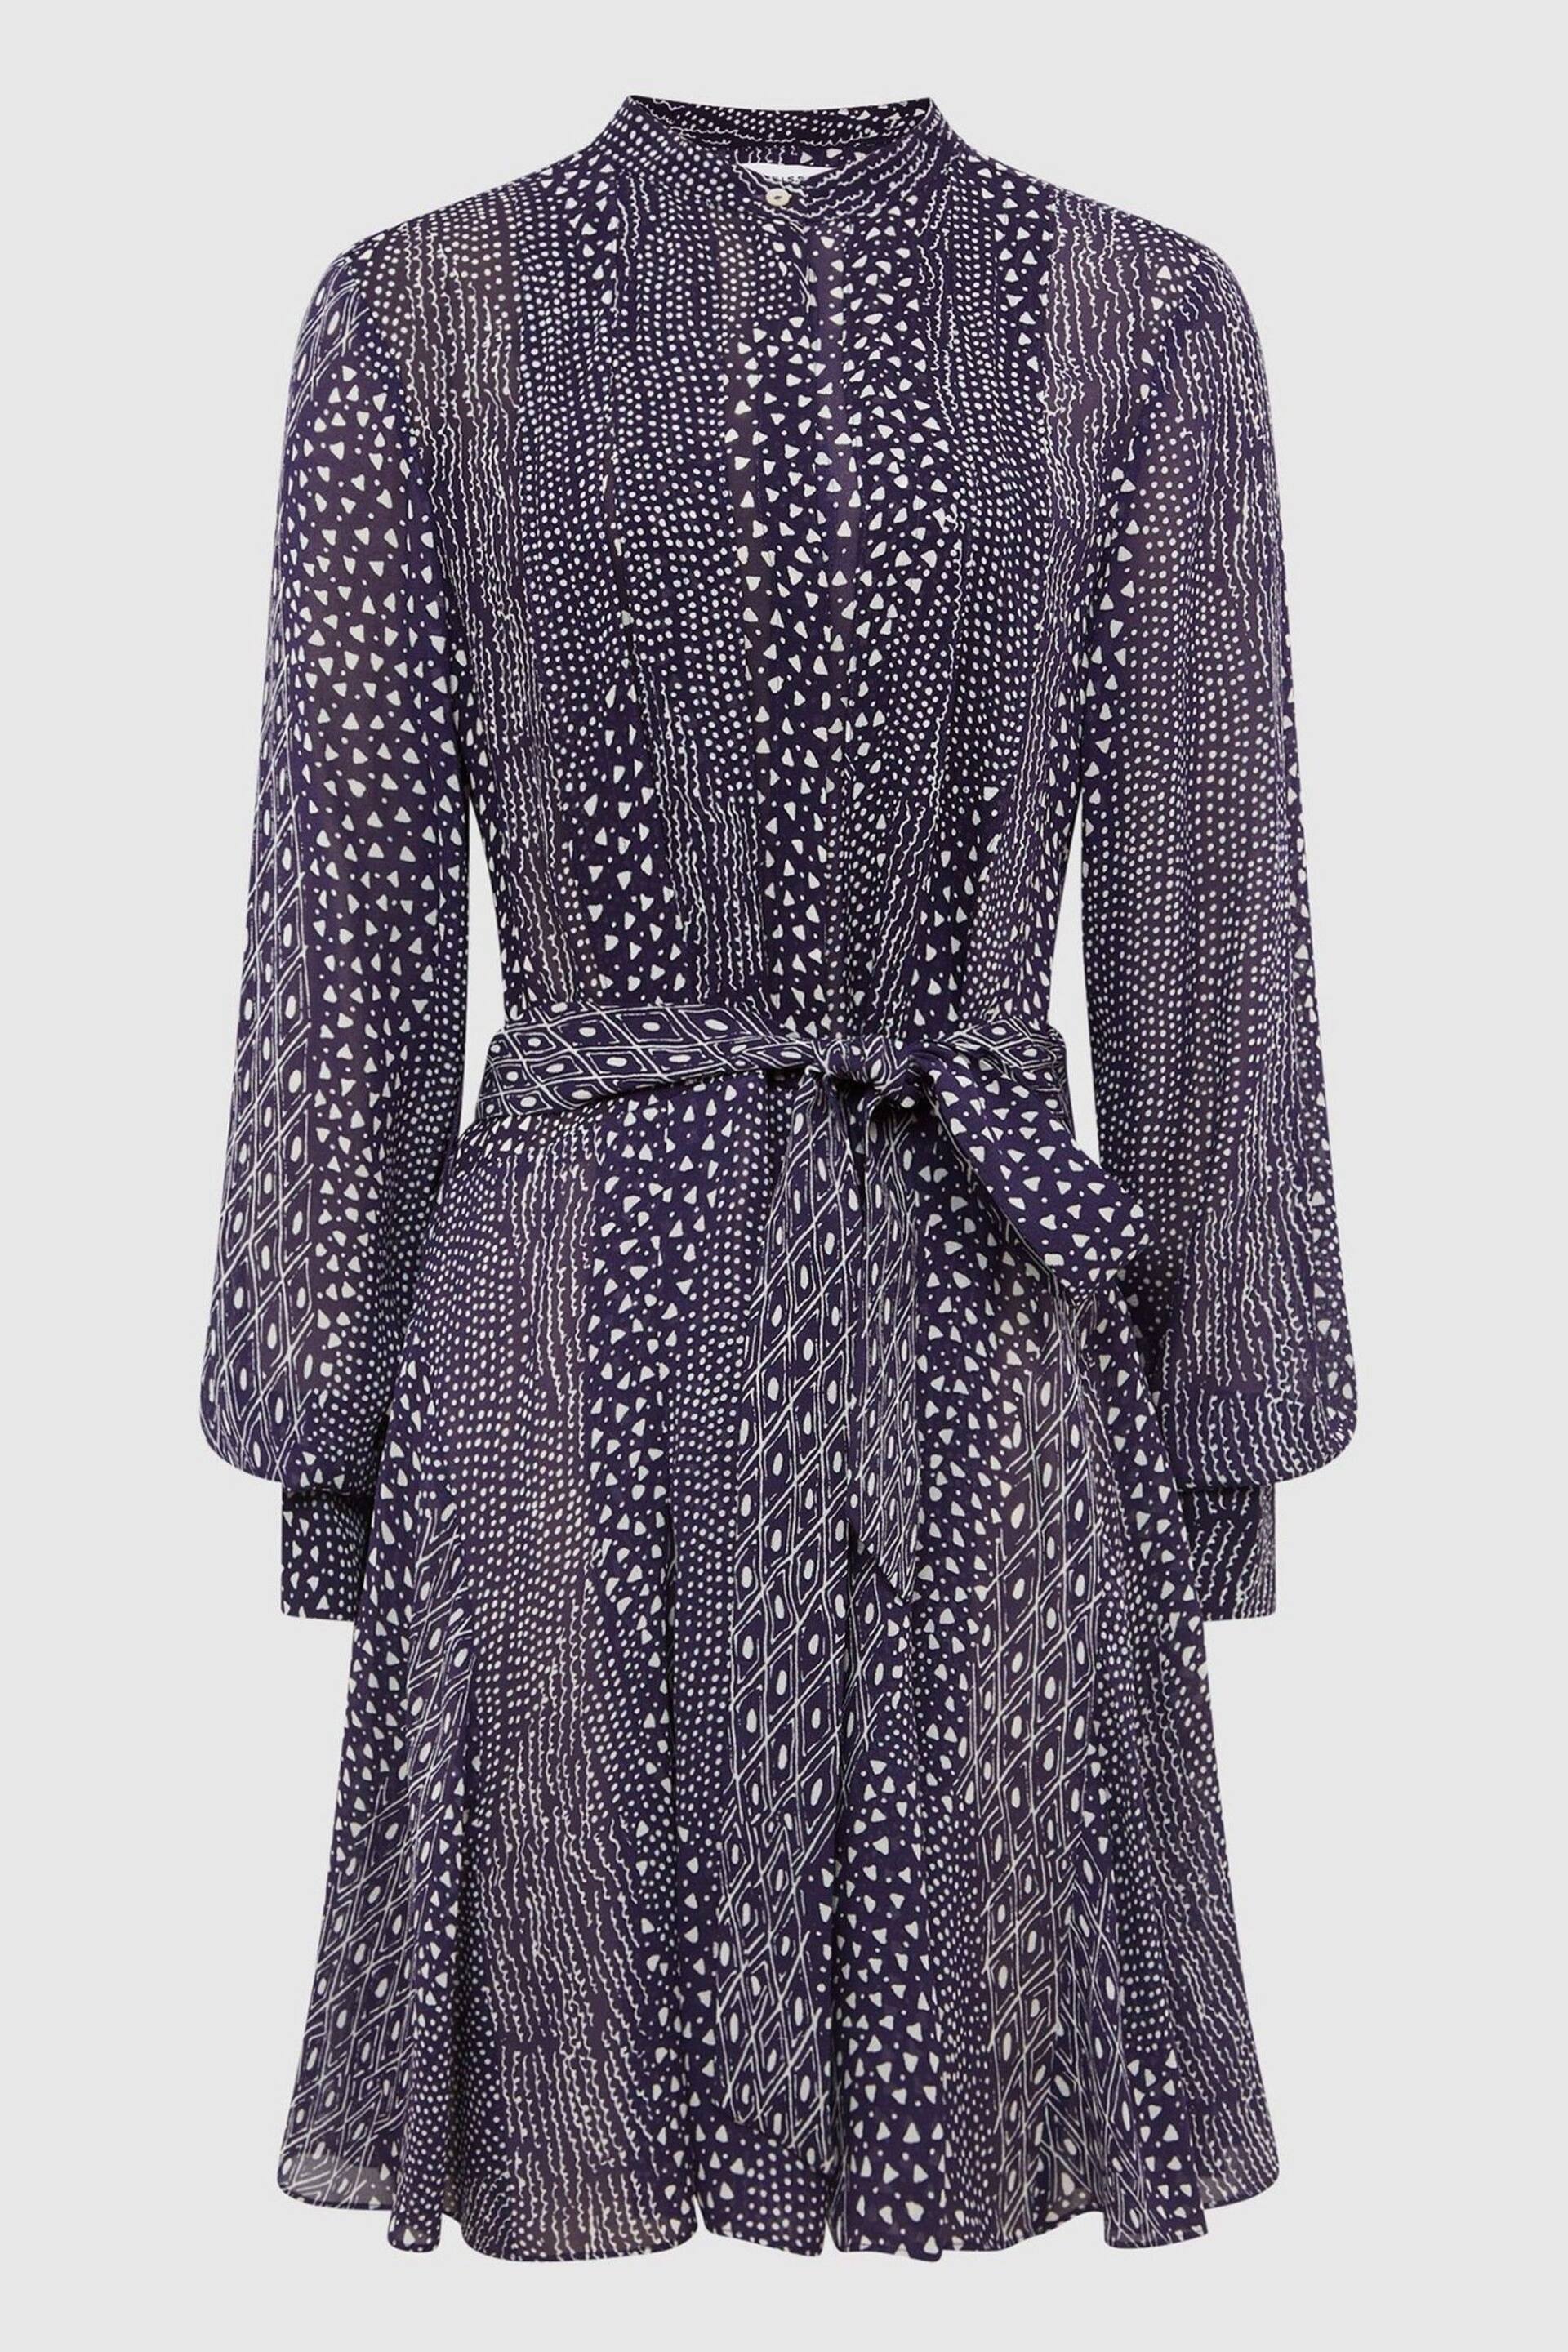 Reiss Purple Luella Printed Mini Dress - Image 2 of 8